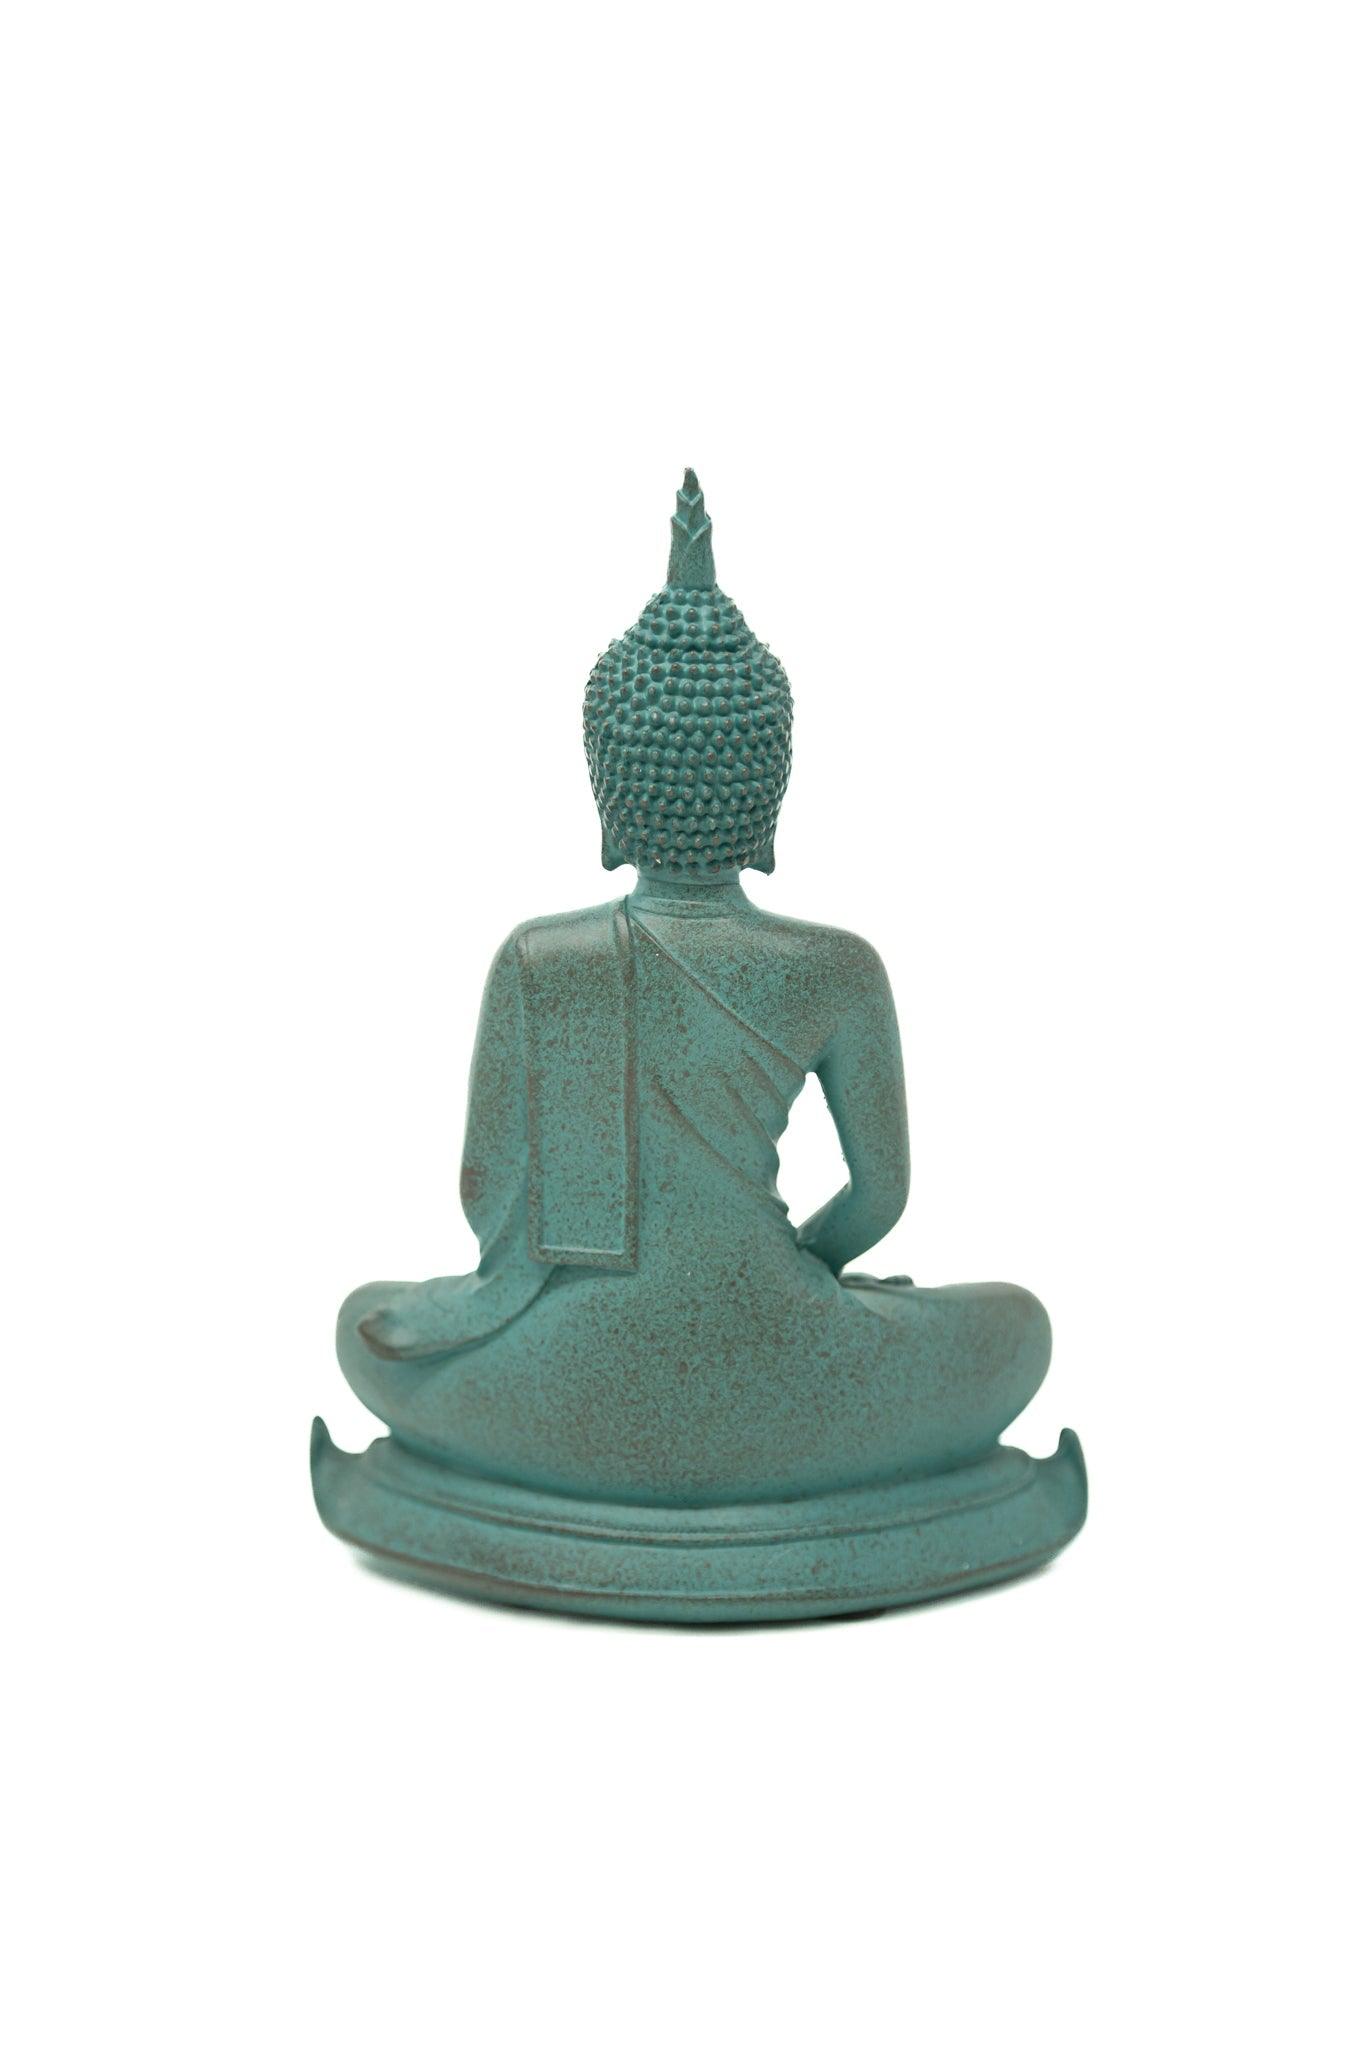 Meditative Blue Buddha Statue 6" - The Harmony Store